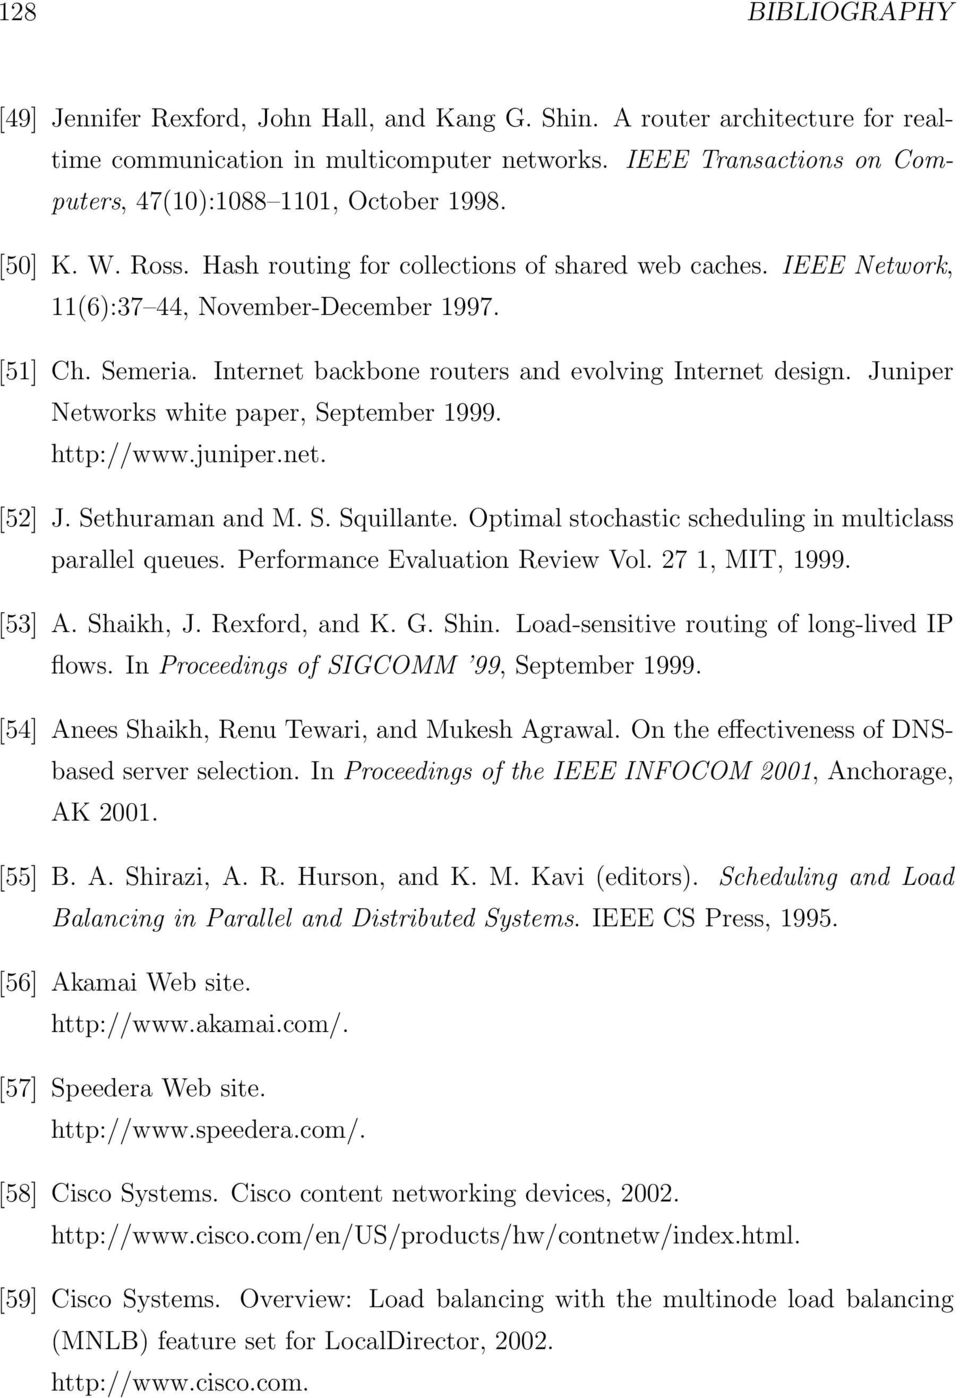 Internet backbone routers and evolving Internet design. Juniper Networks white paper, September 1999. http://www.juniper.net. [52] J. Sethuraman and M. S. Squillante.